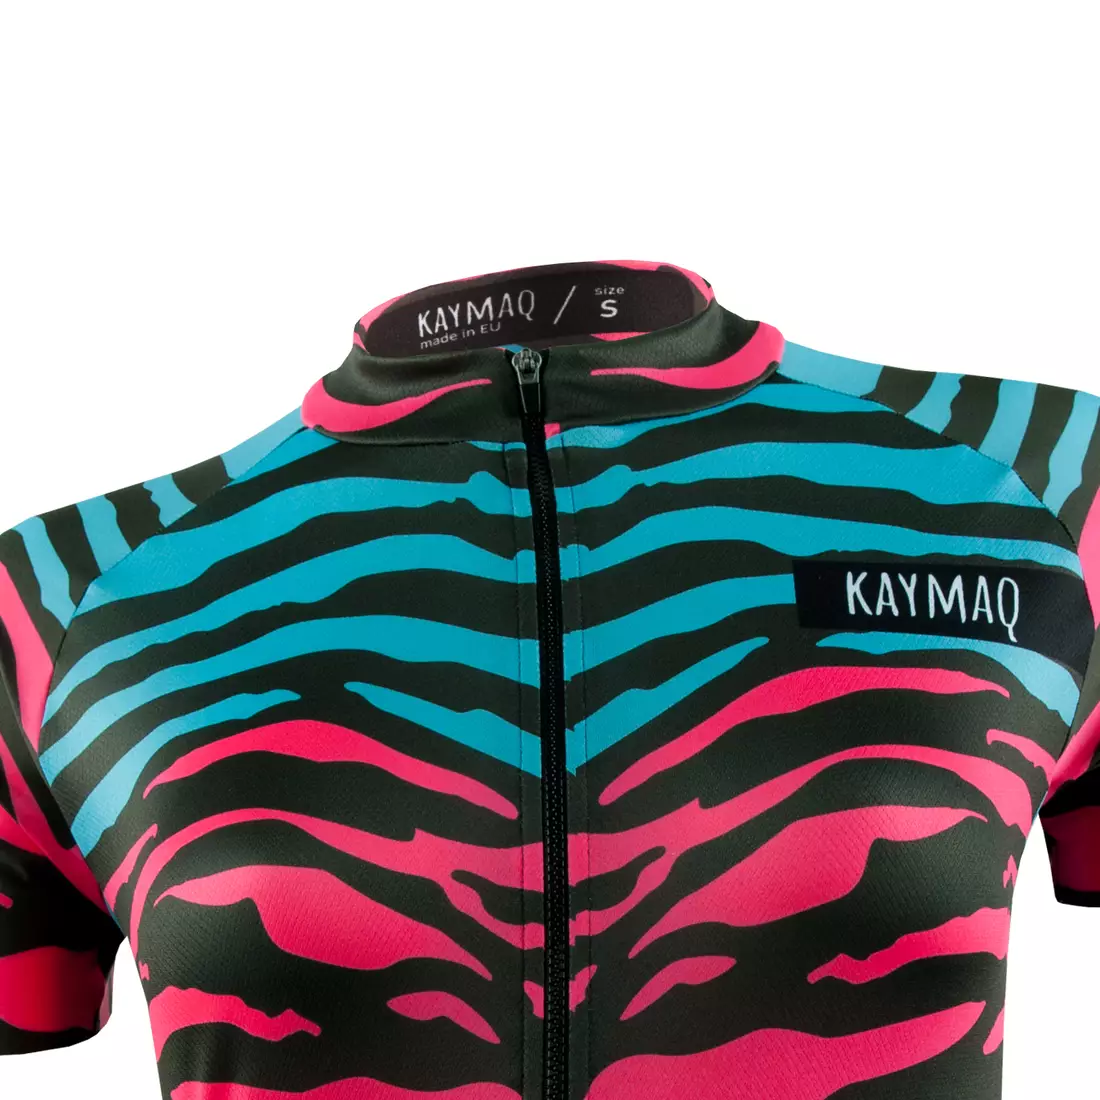 KAYMAQ DESIGN W1-W40 dámský cyklistický dres s krátkým rukávem